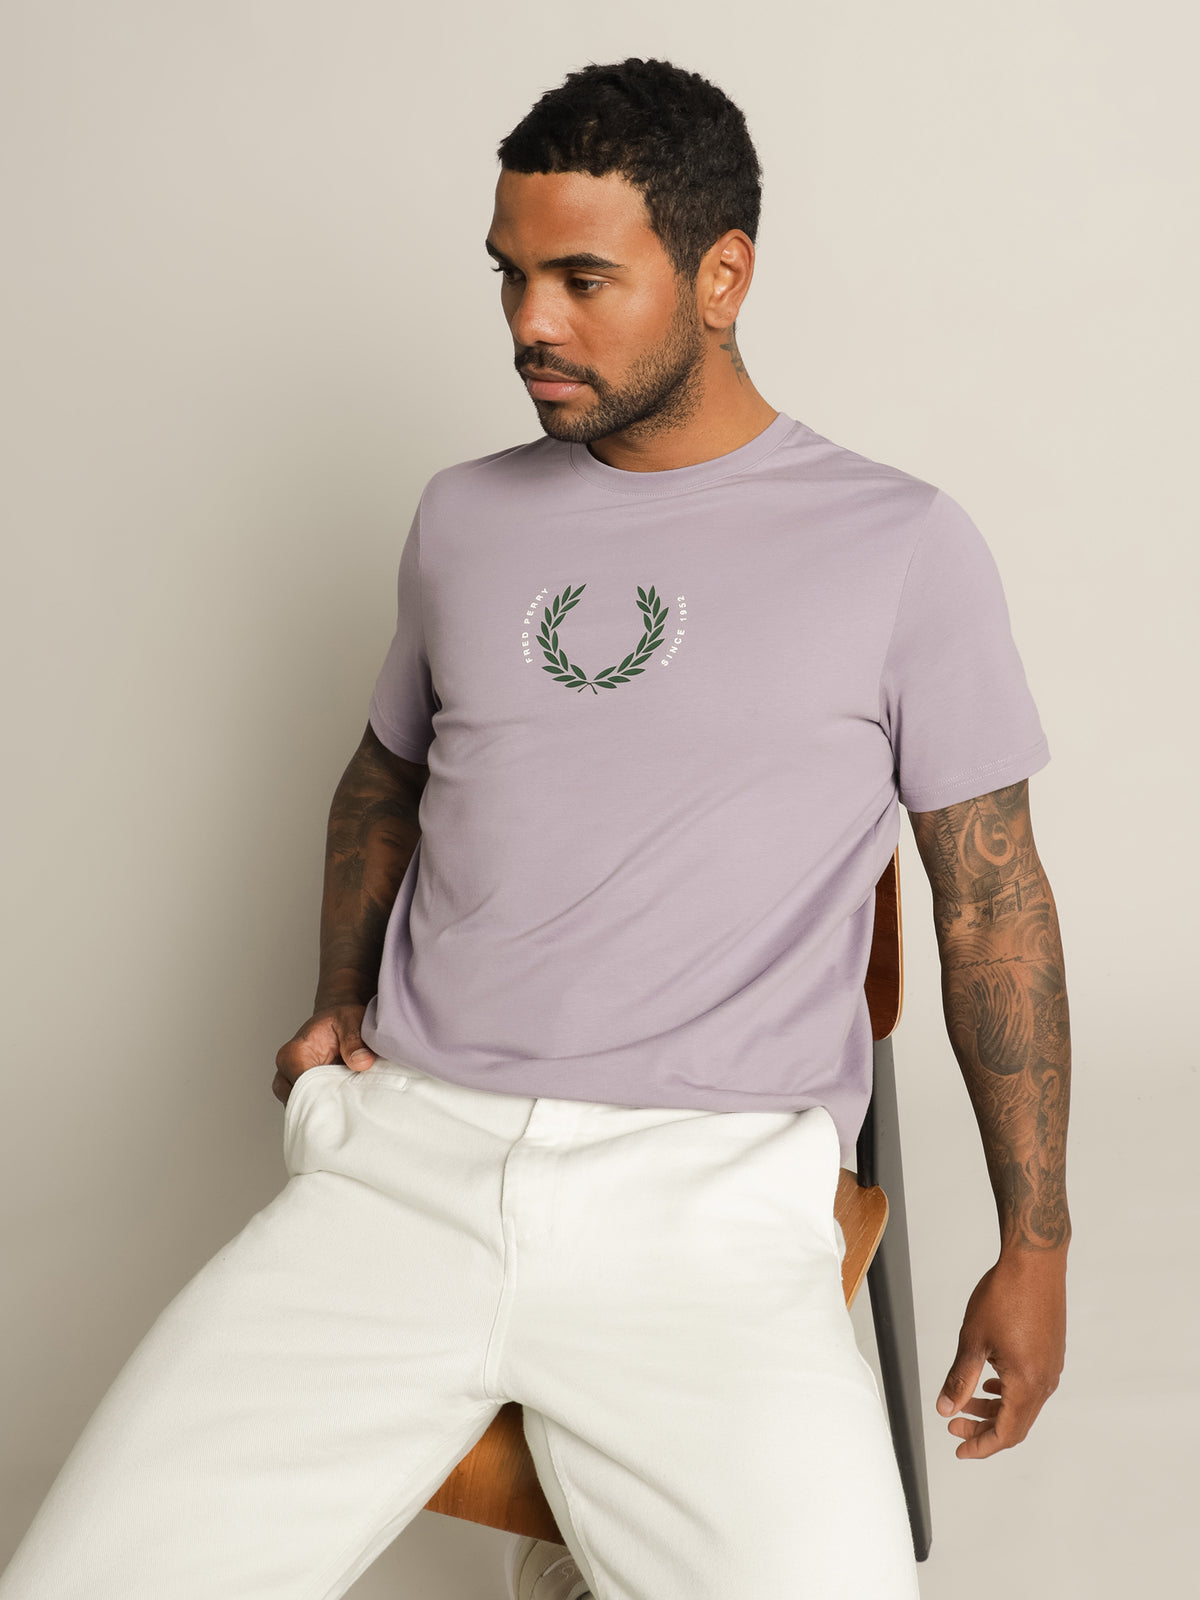 Arch Branding T-Shirt in Lavender